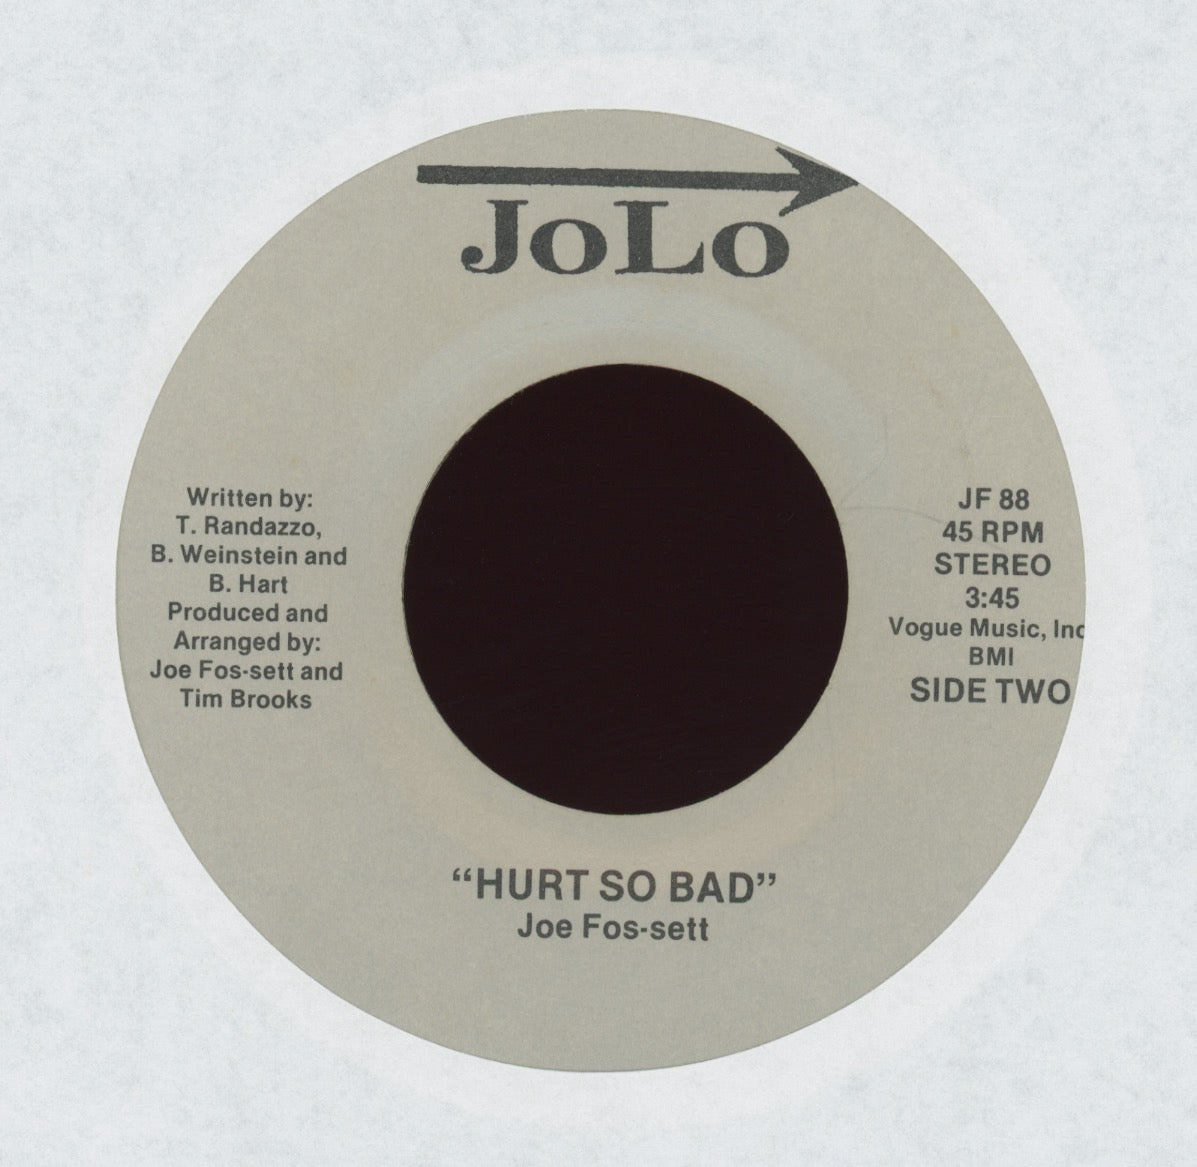 Joe Fos-sett - Hurt So Bad on JoLo Modern Soul 45